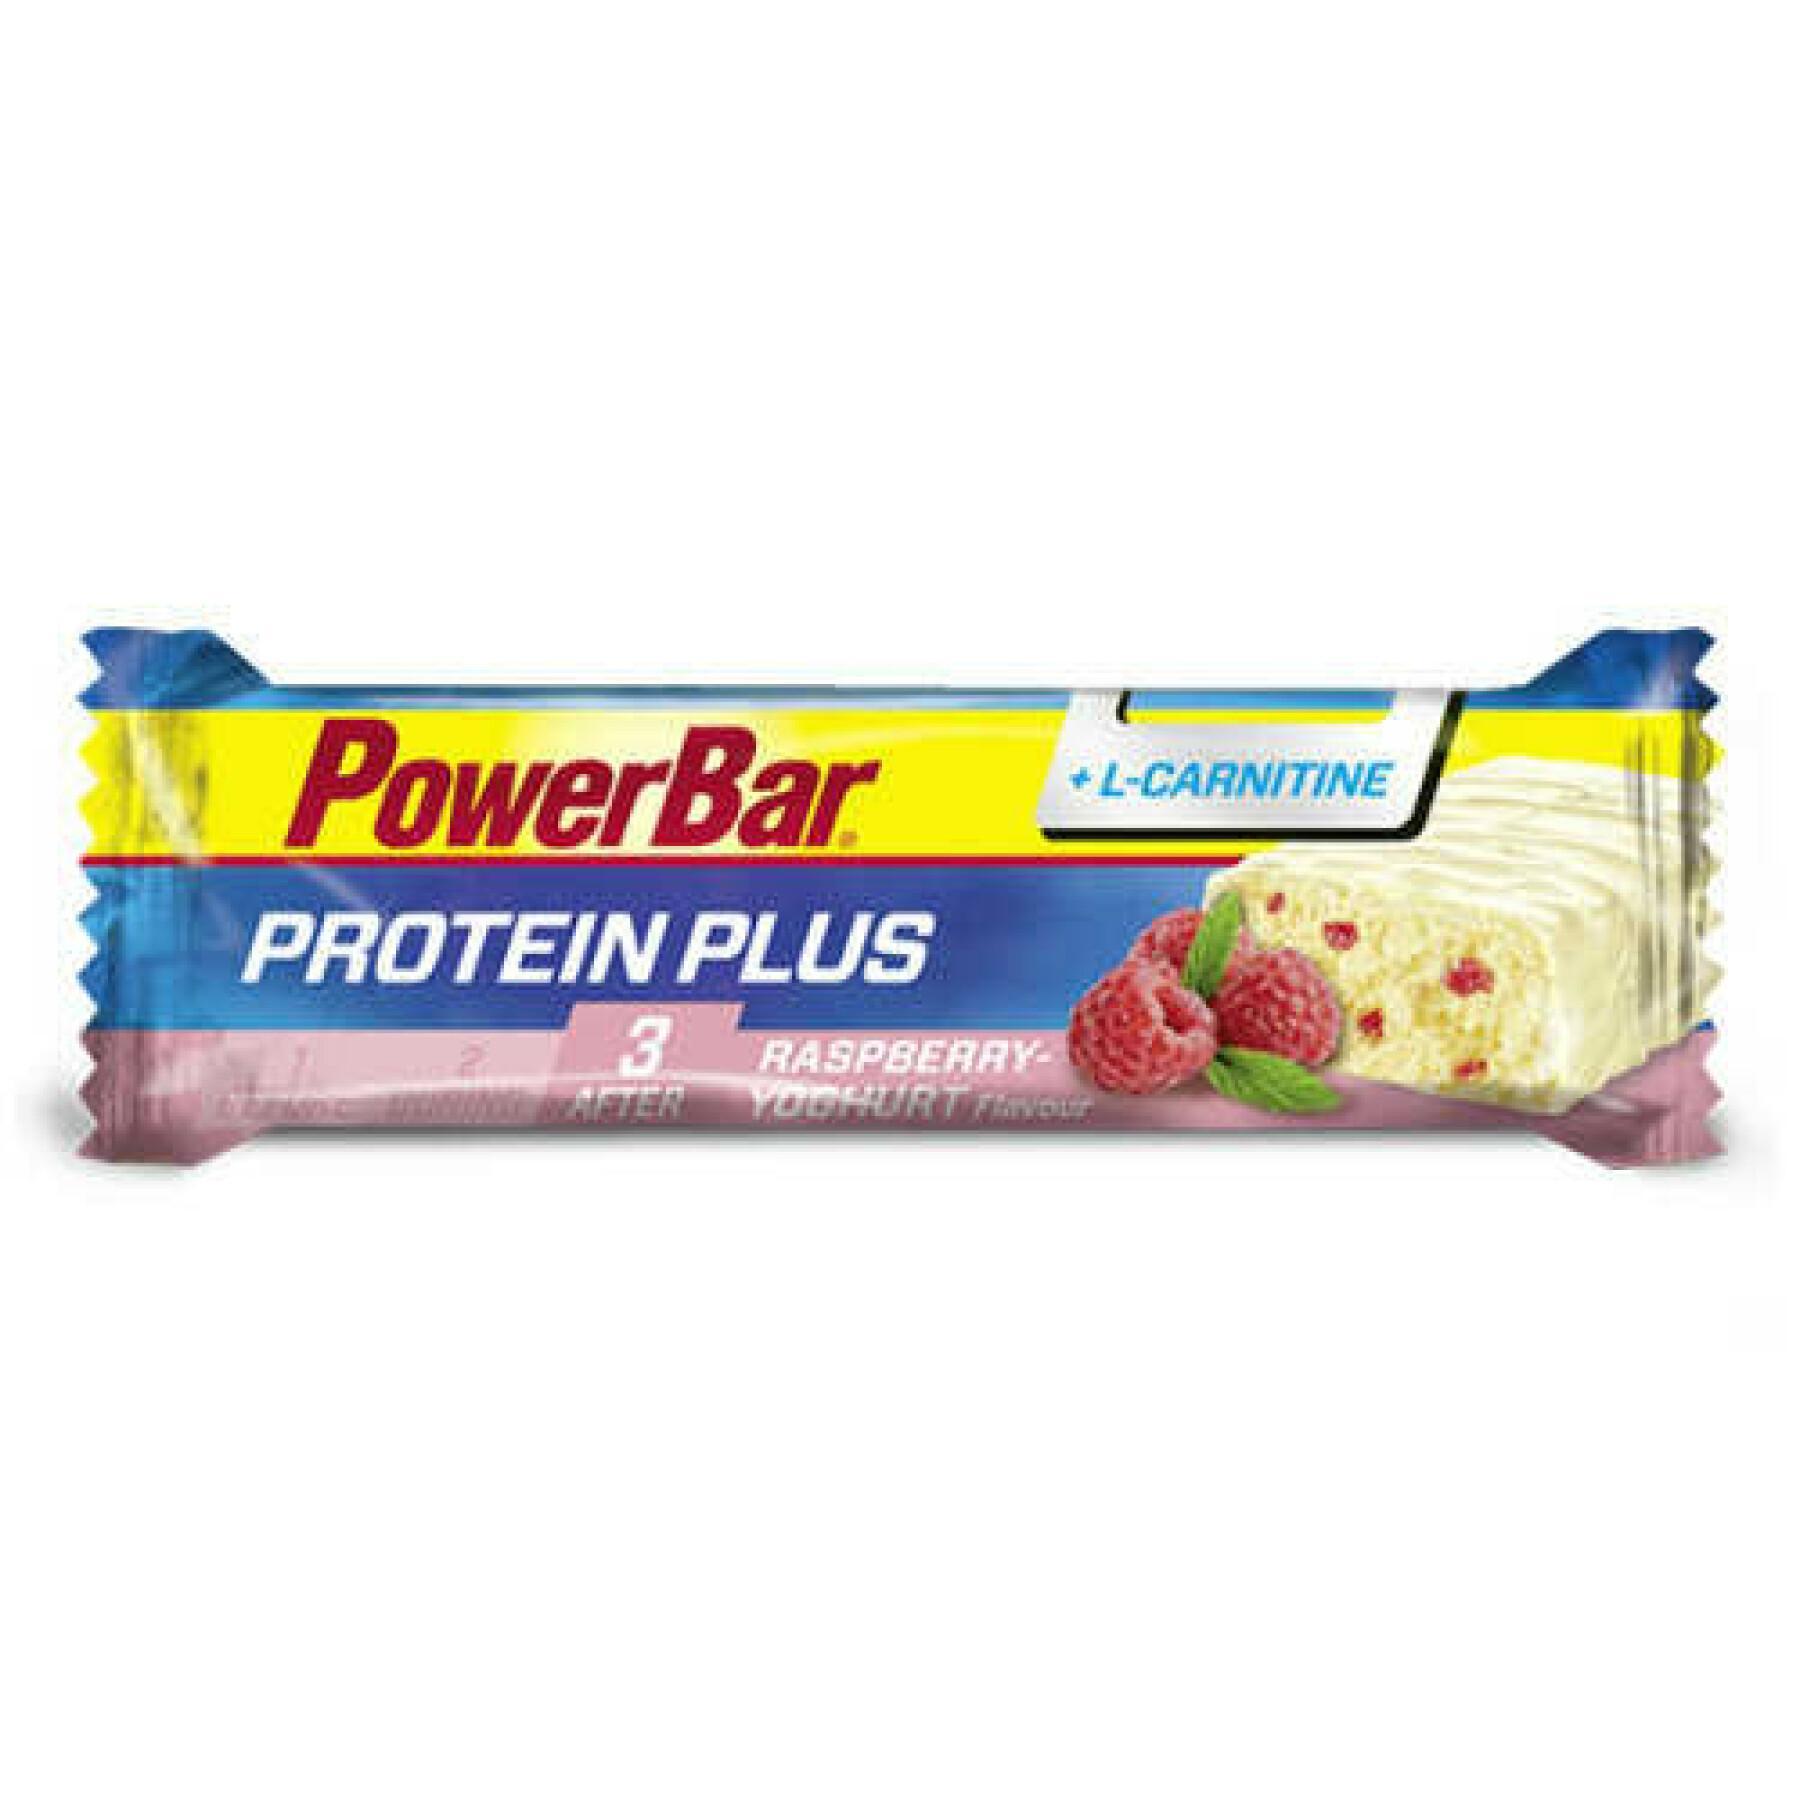 Set van 30 repen PowerBar ProteinPlus L-Carnitin - Raspberry-Yoghurt